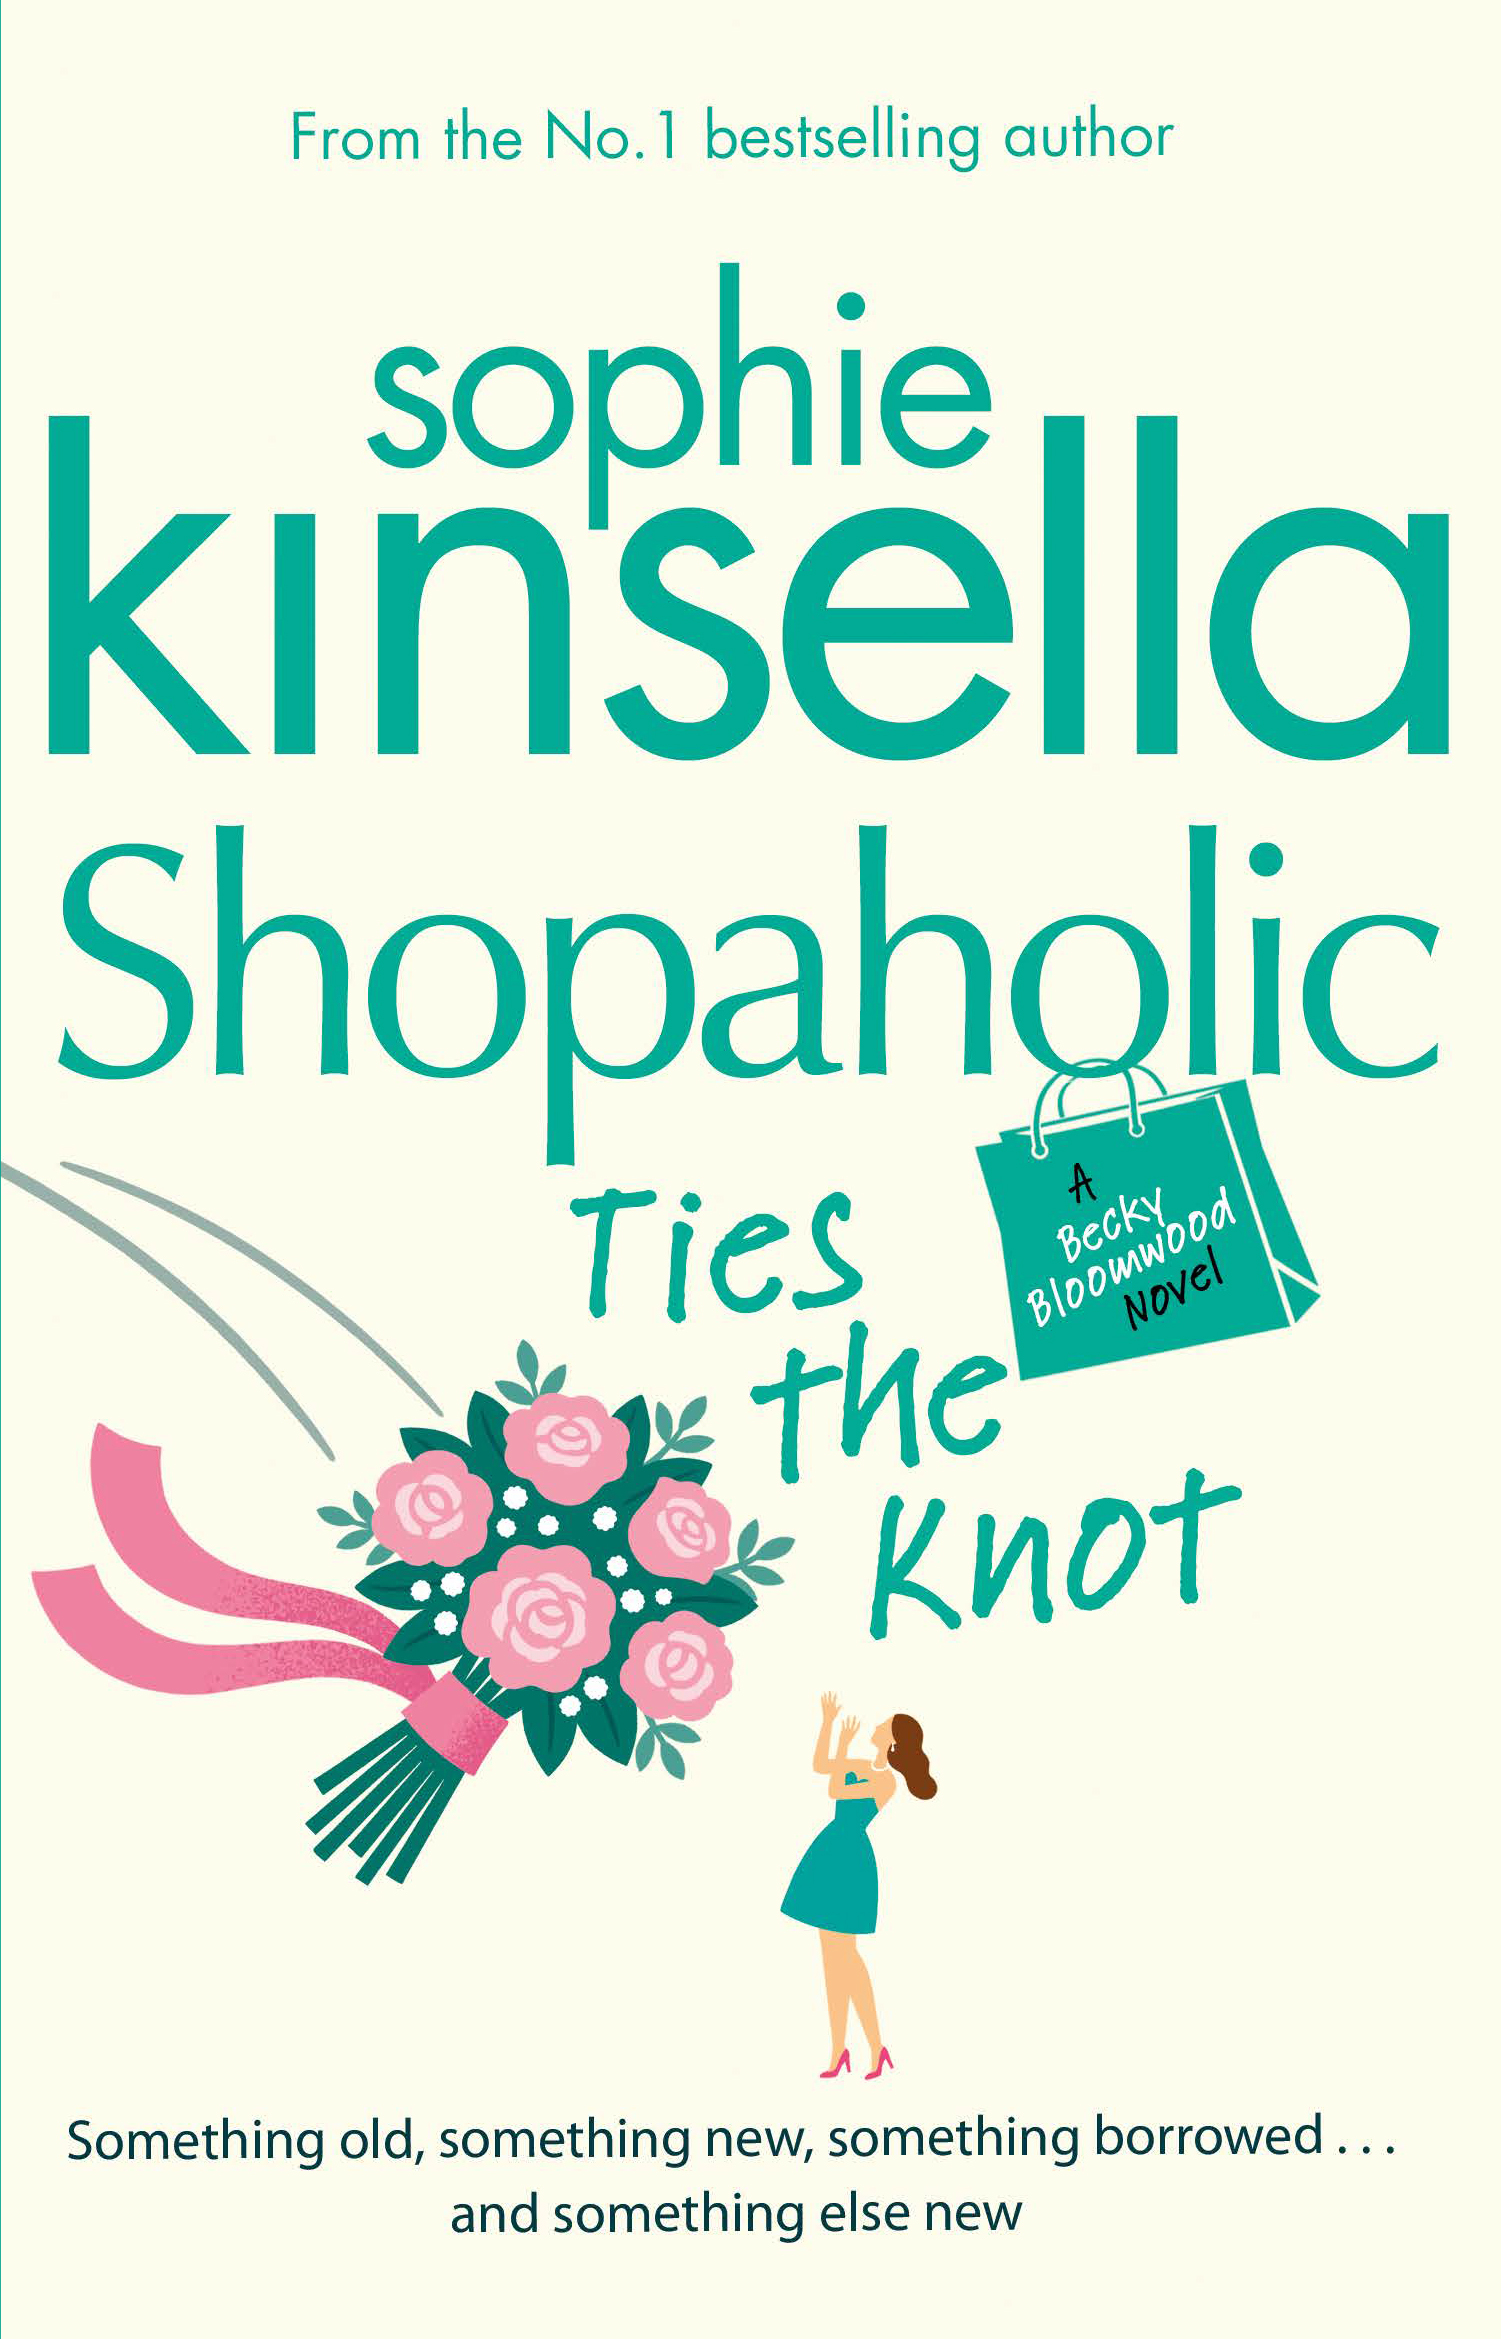 3. Shopaholic Ties The Knot